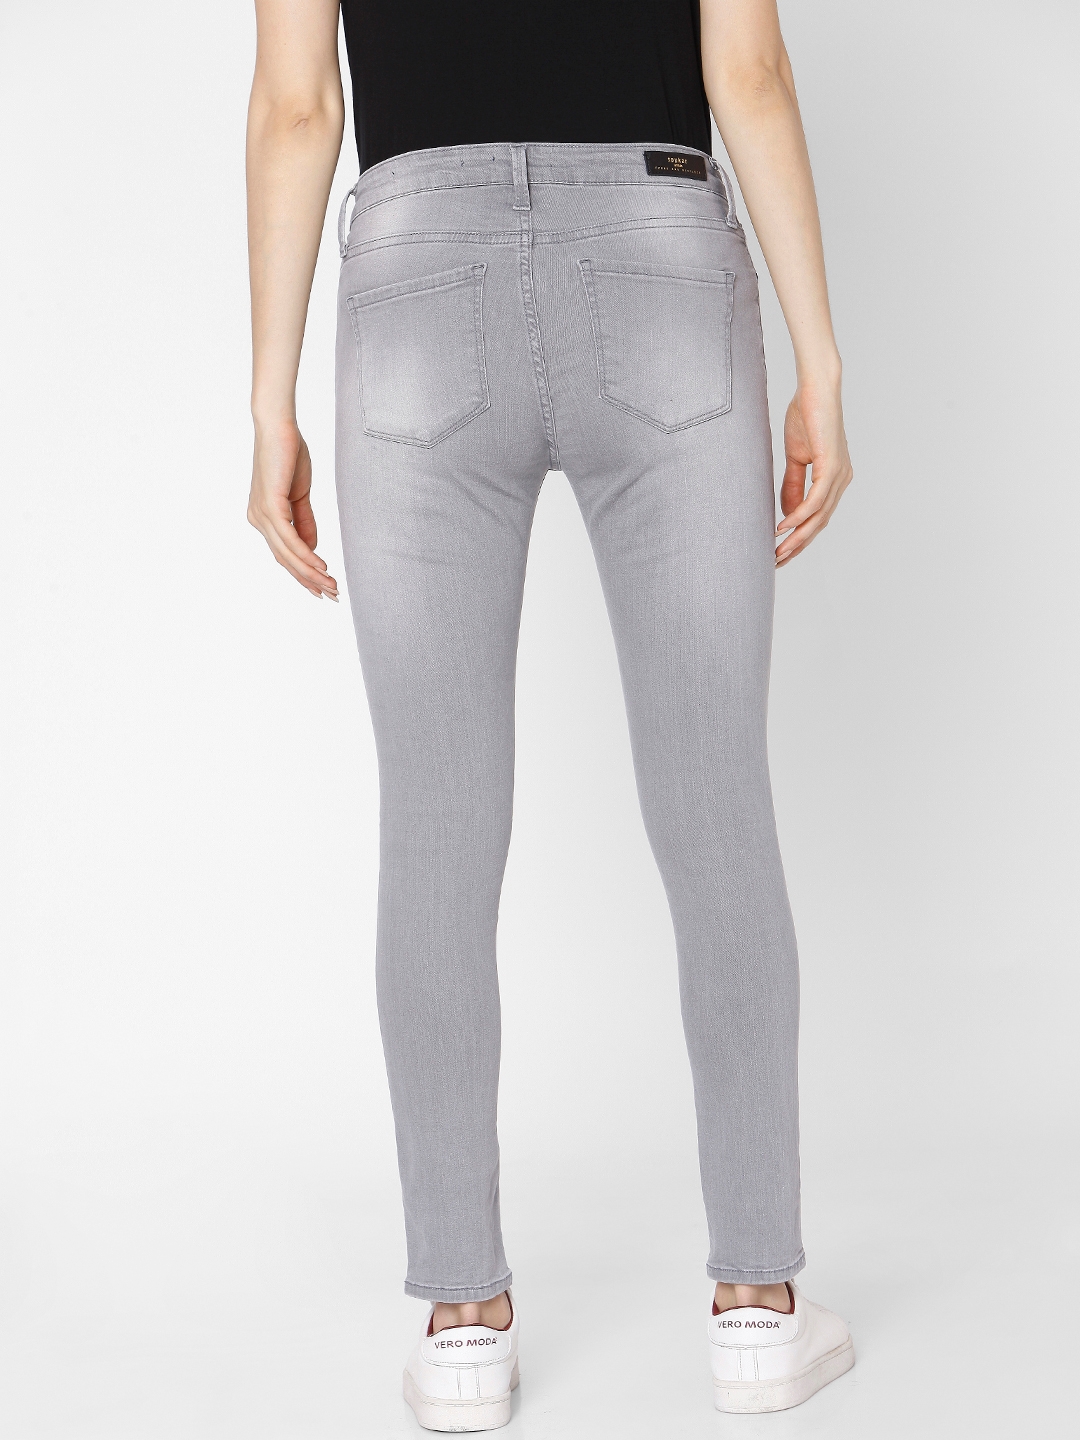 spykar | Women's Grey Cotton Solid Skinny Jeans 4